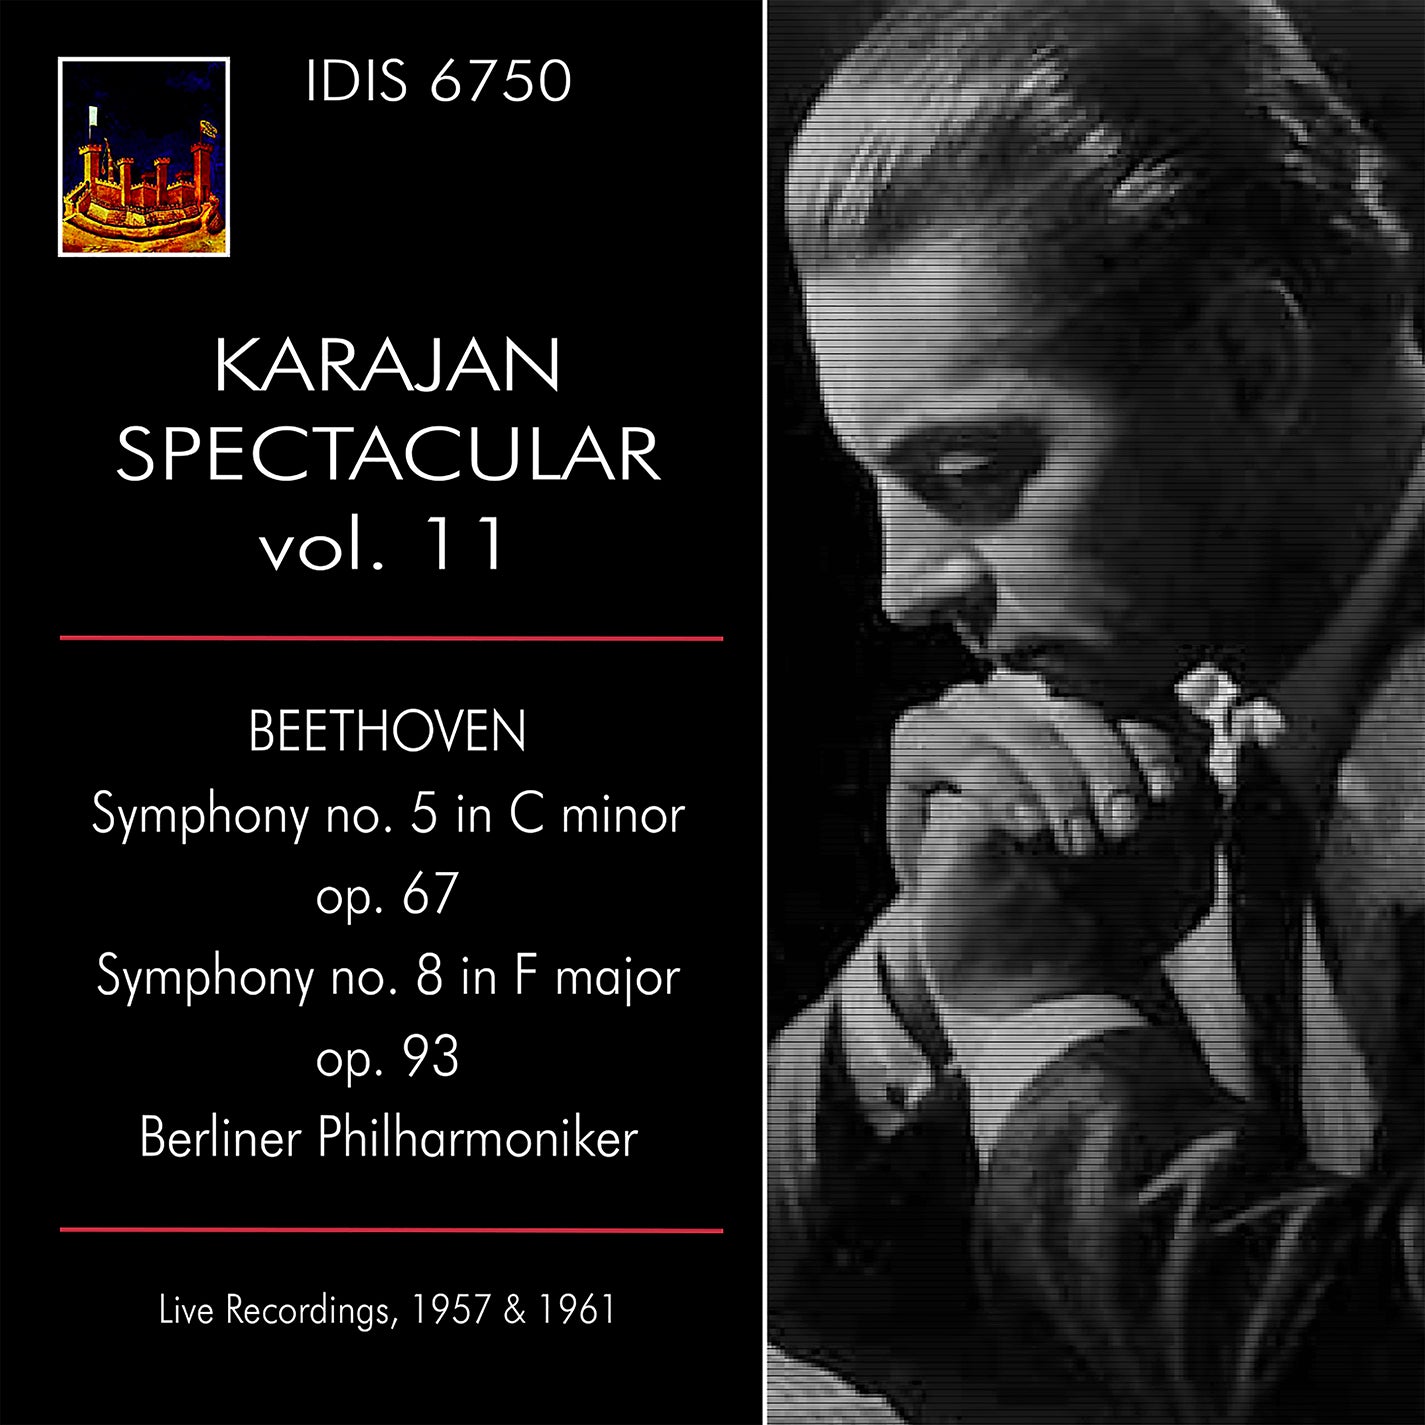 Beethoven: Karajan Spectacular, Vol. 11 - Live recordings 1957 - 1961